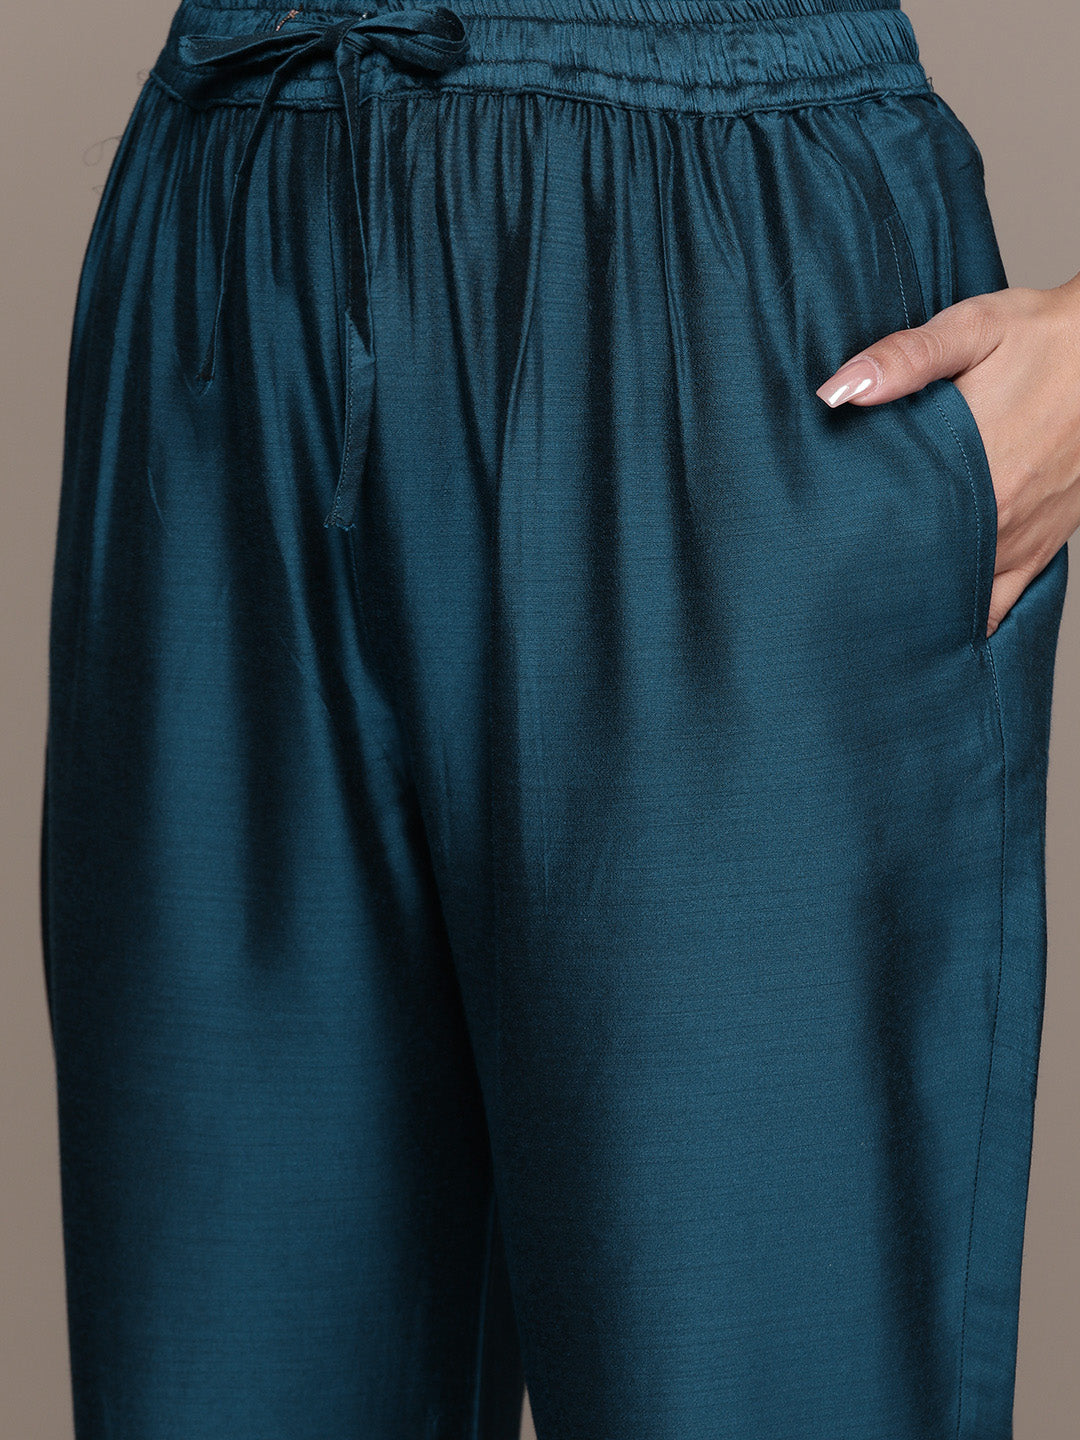 Ishin Women's Teal Sequinned Embellished A-Line Kurta Trouser Dupatta Set